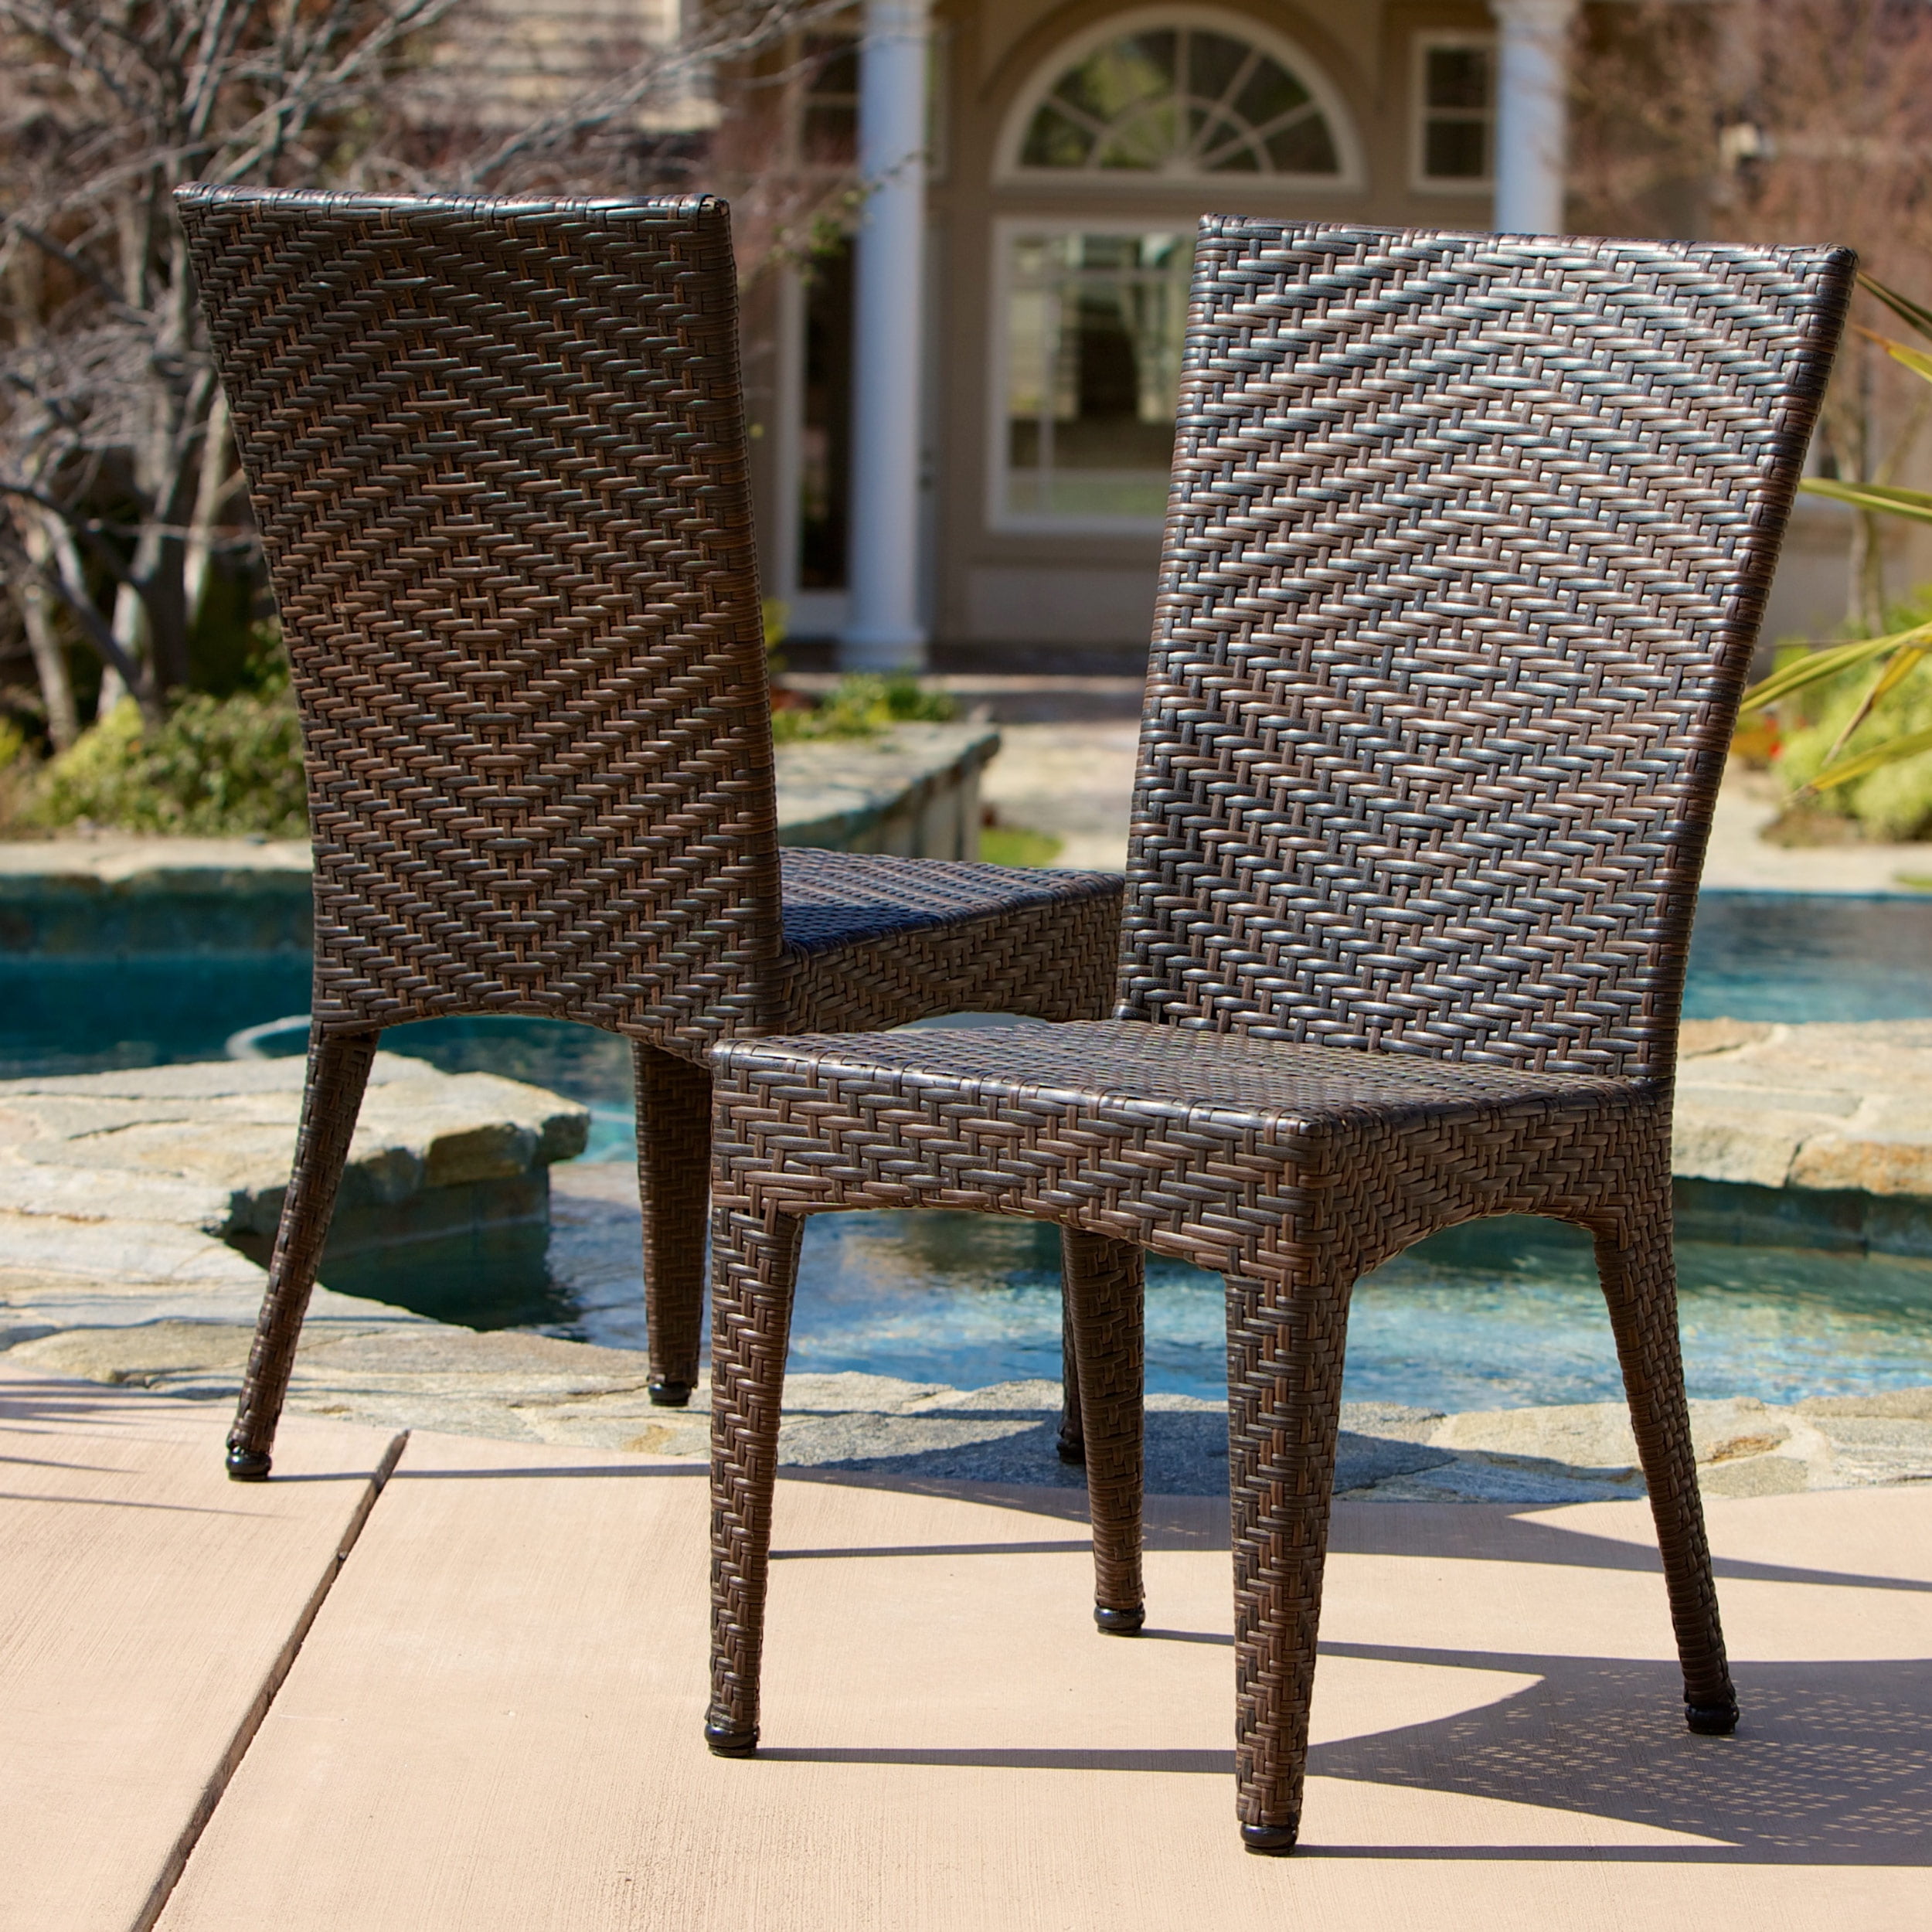 Better Homes & Gardens Outdoor Wicker Chairs, Brown, Set of 2 - Walmart